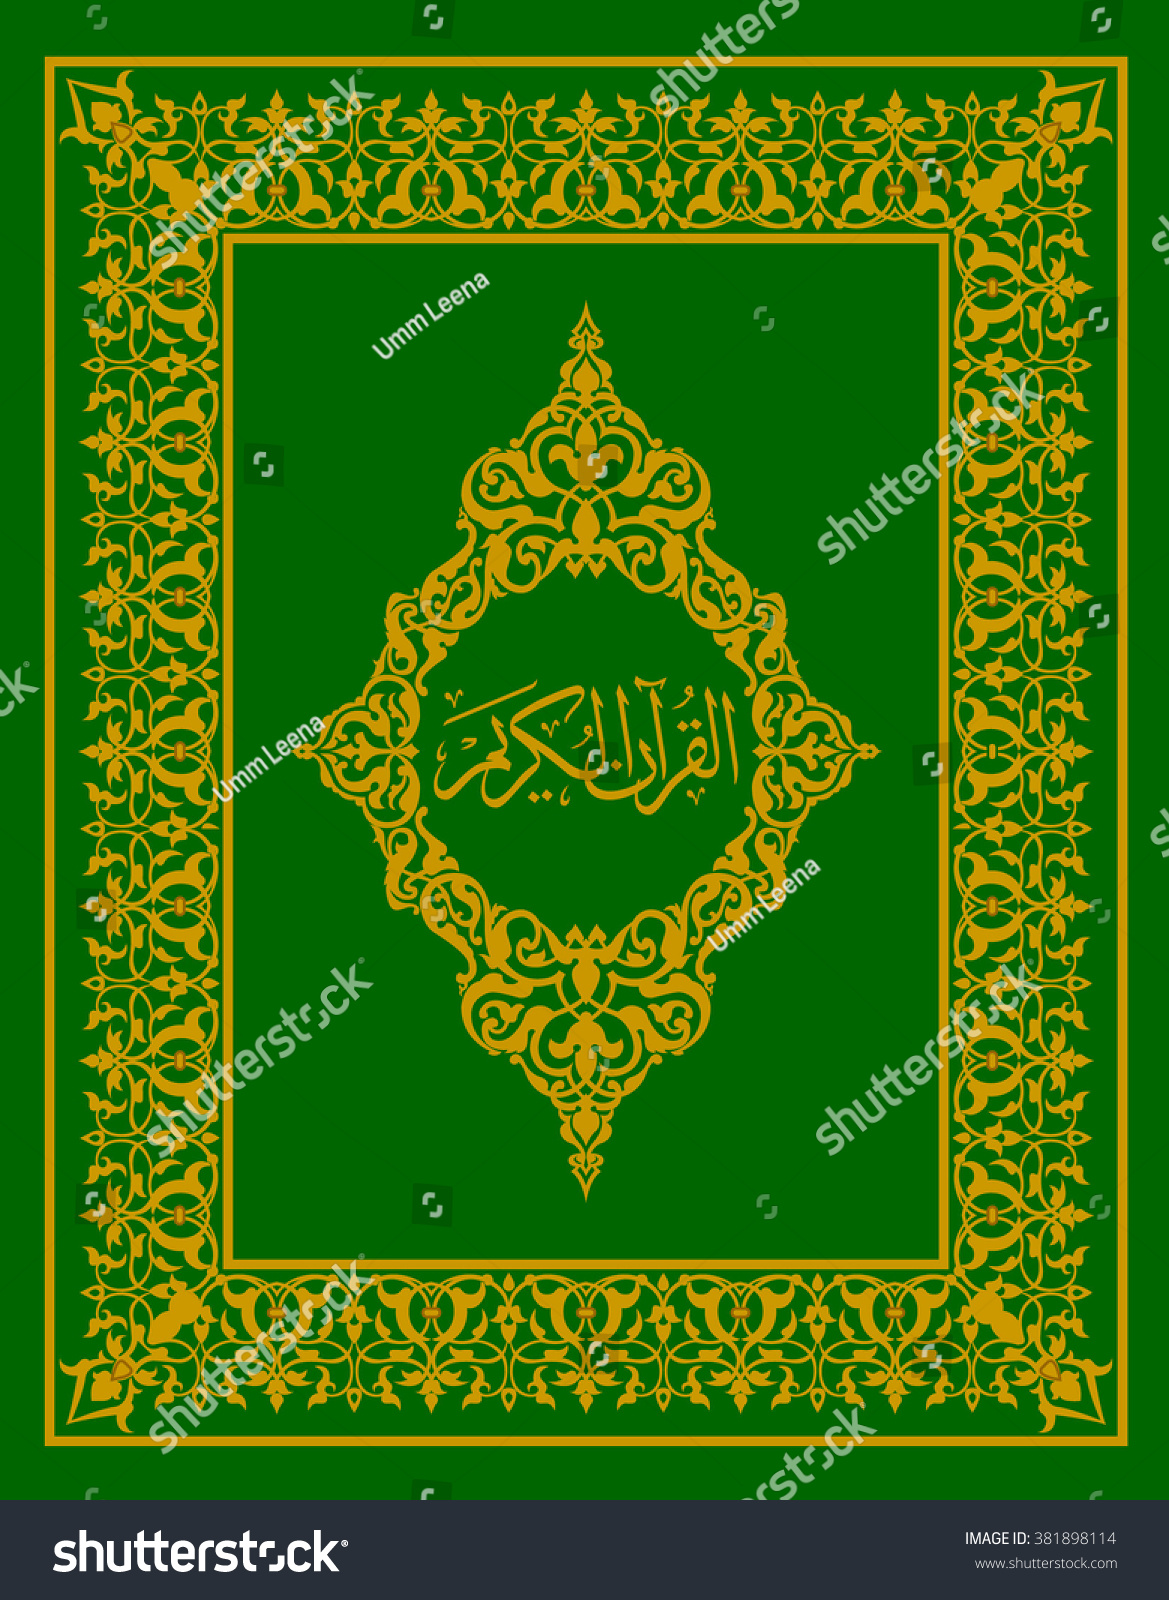 Arabic Islamic Books Free Download